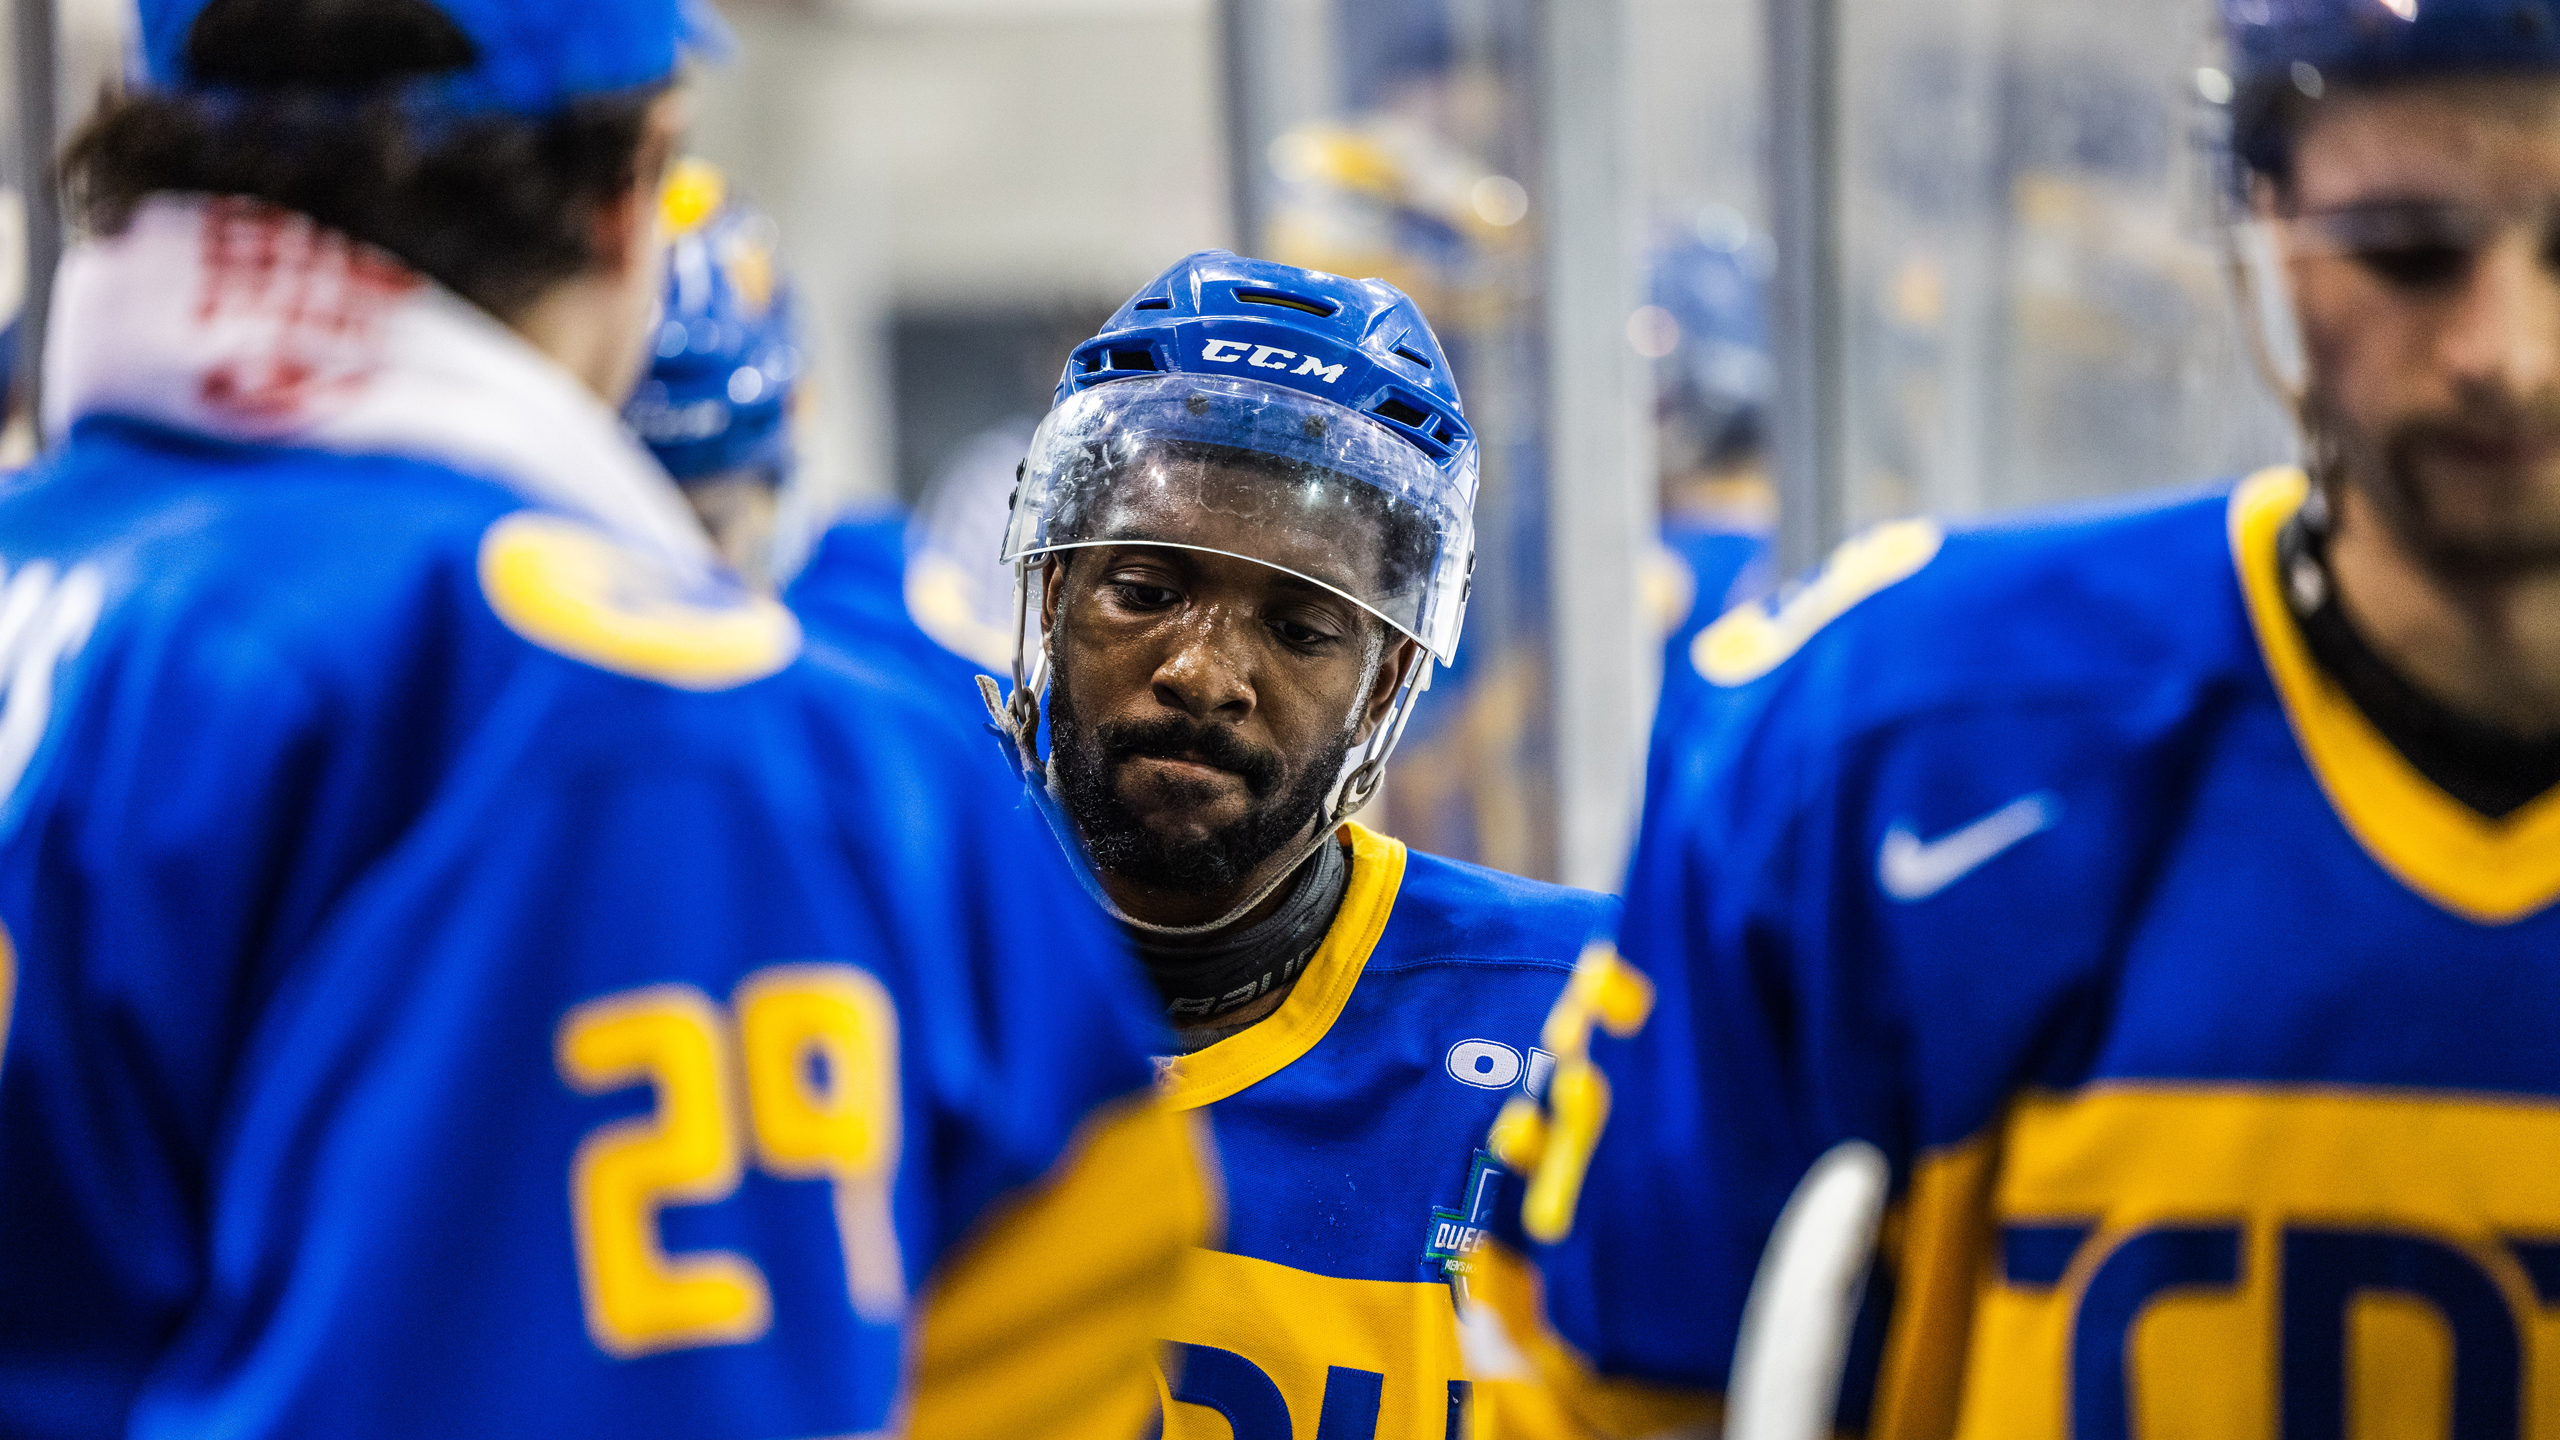 TMU Bold men's hockey player Elijah Roberts looks sad